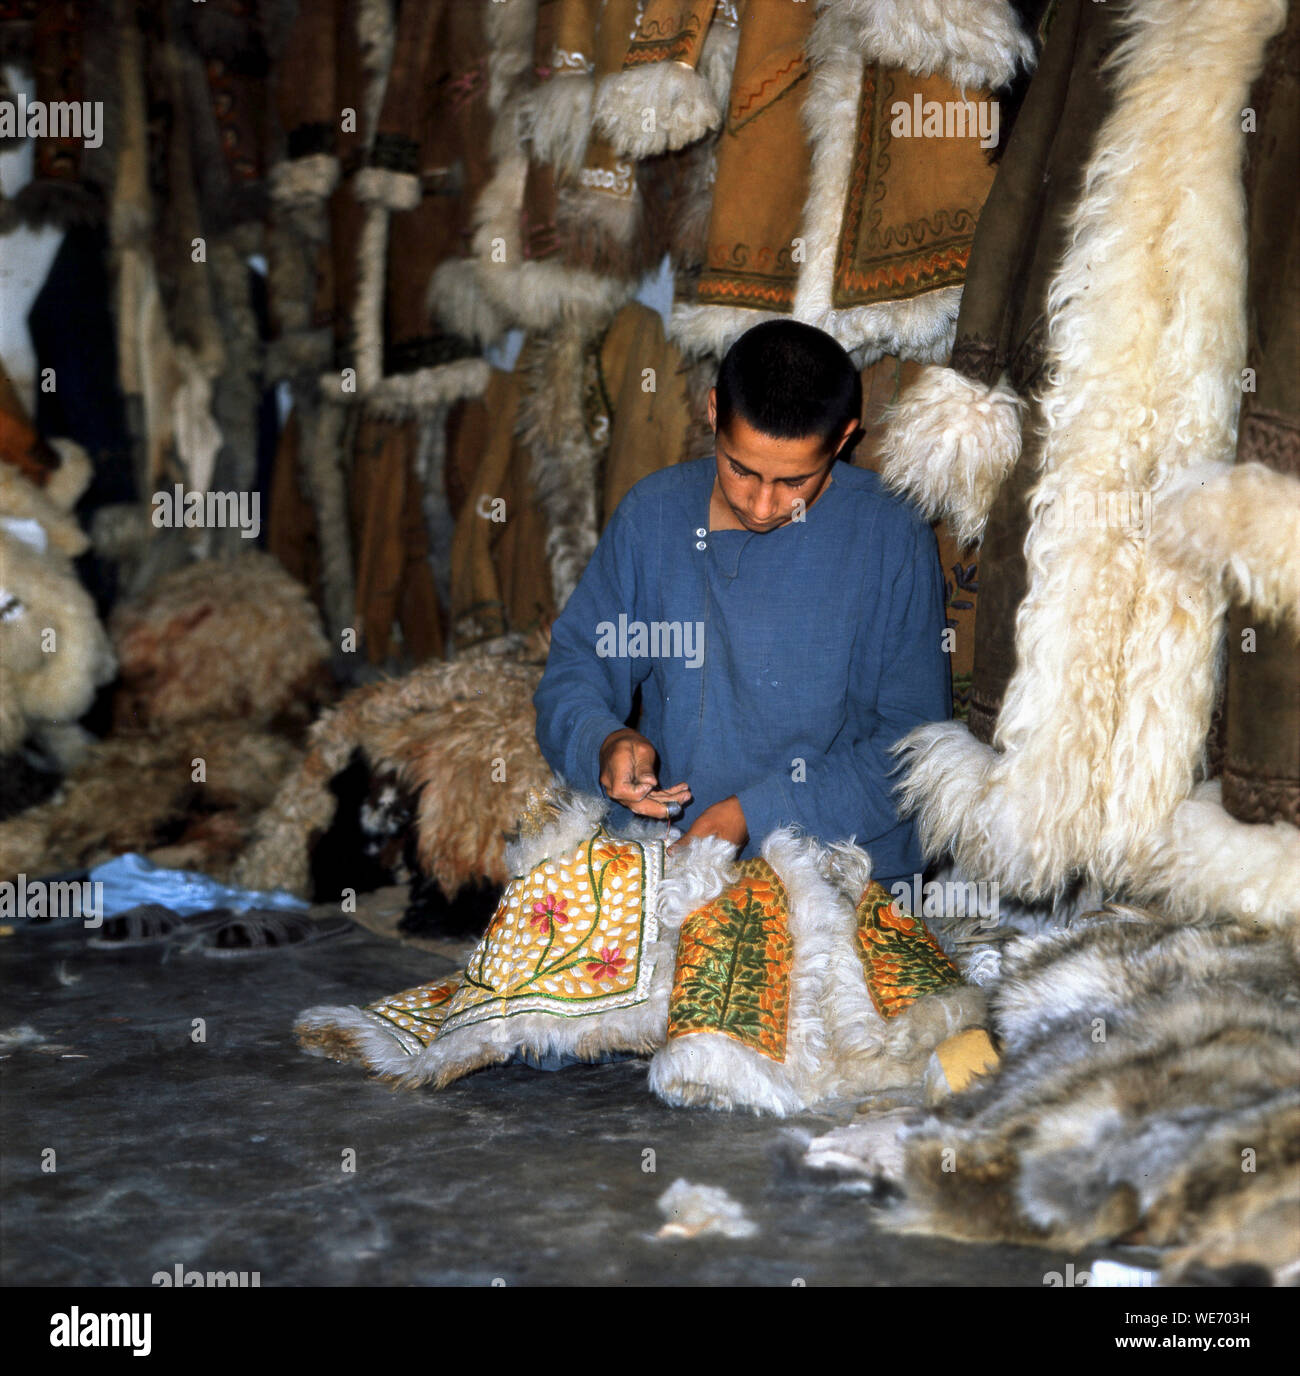 Afghan Coat shop, Herat, 1974 Stock Photo - Alamy